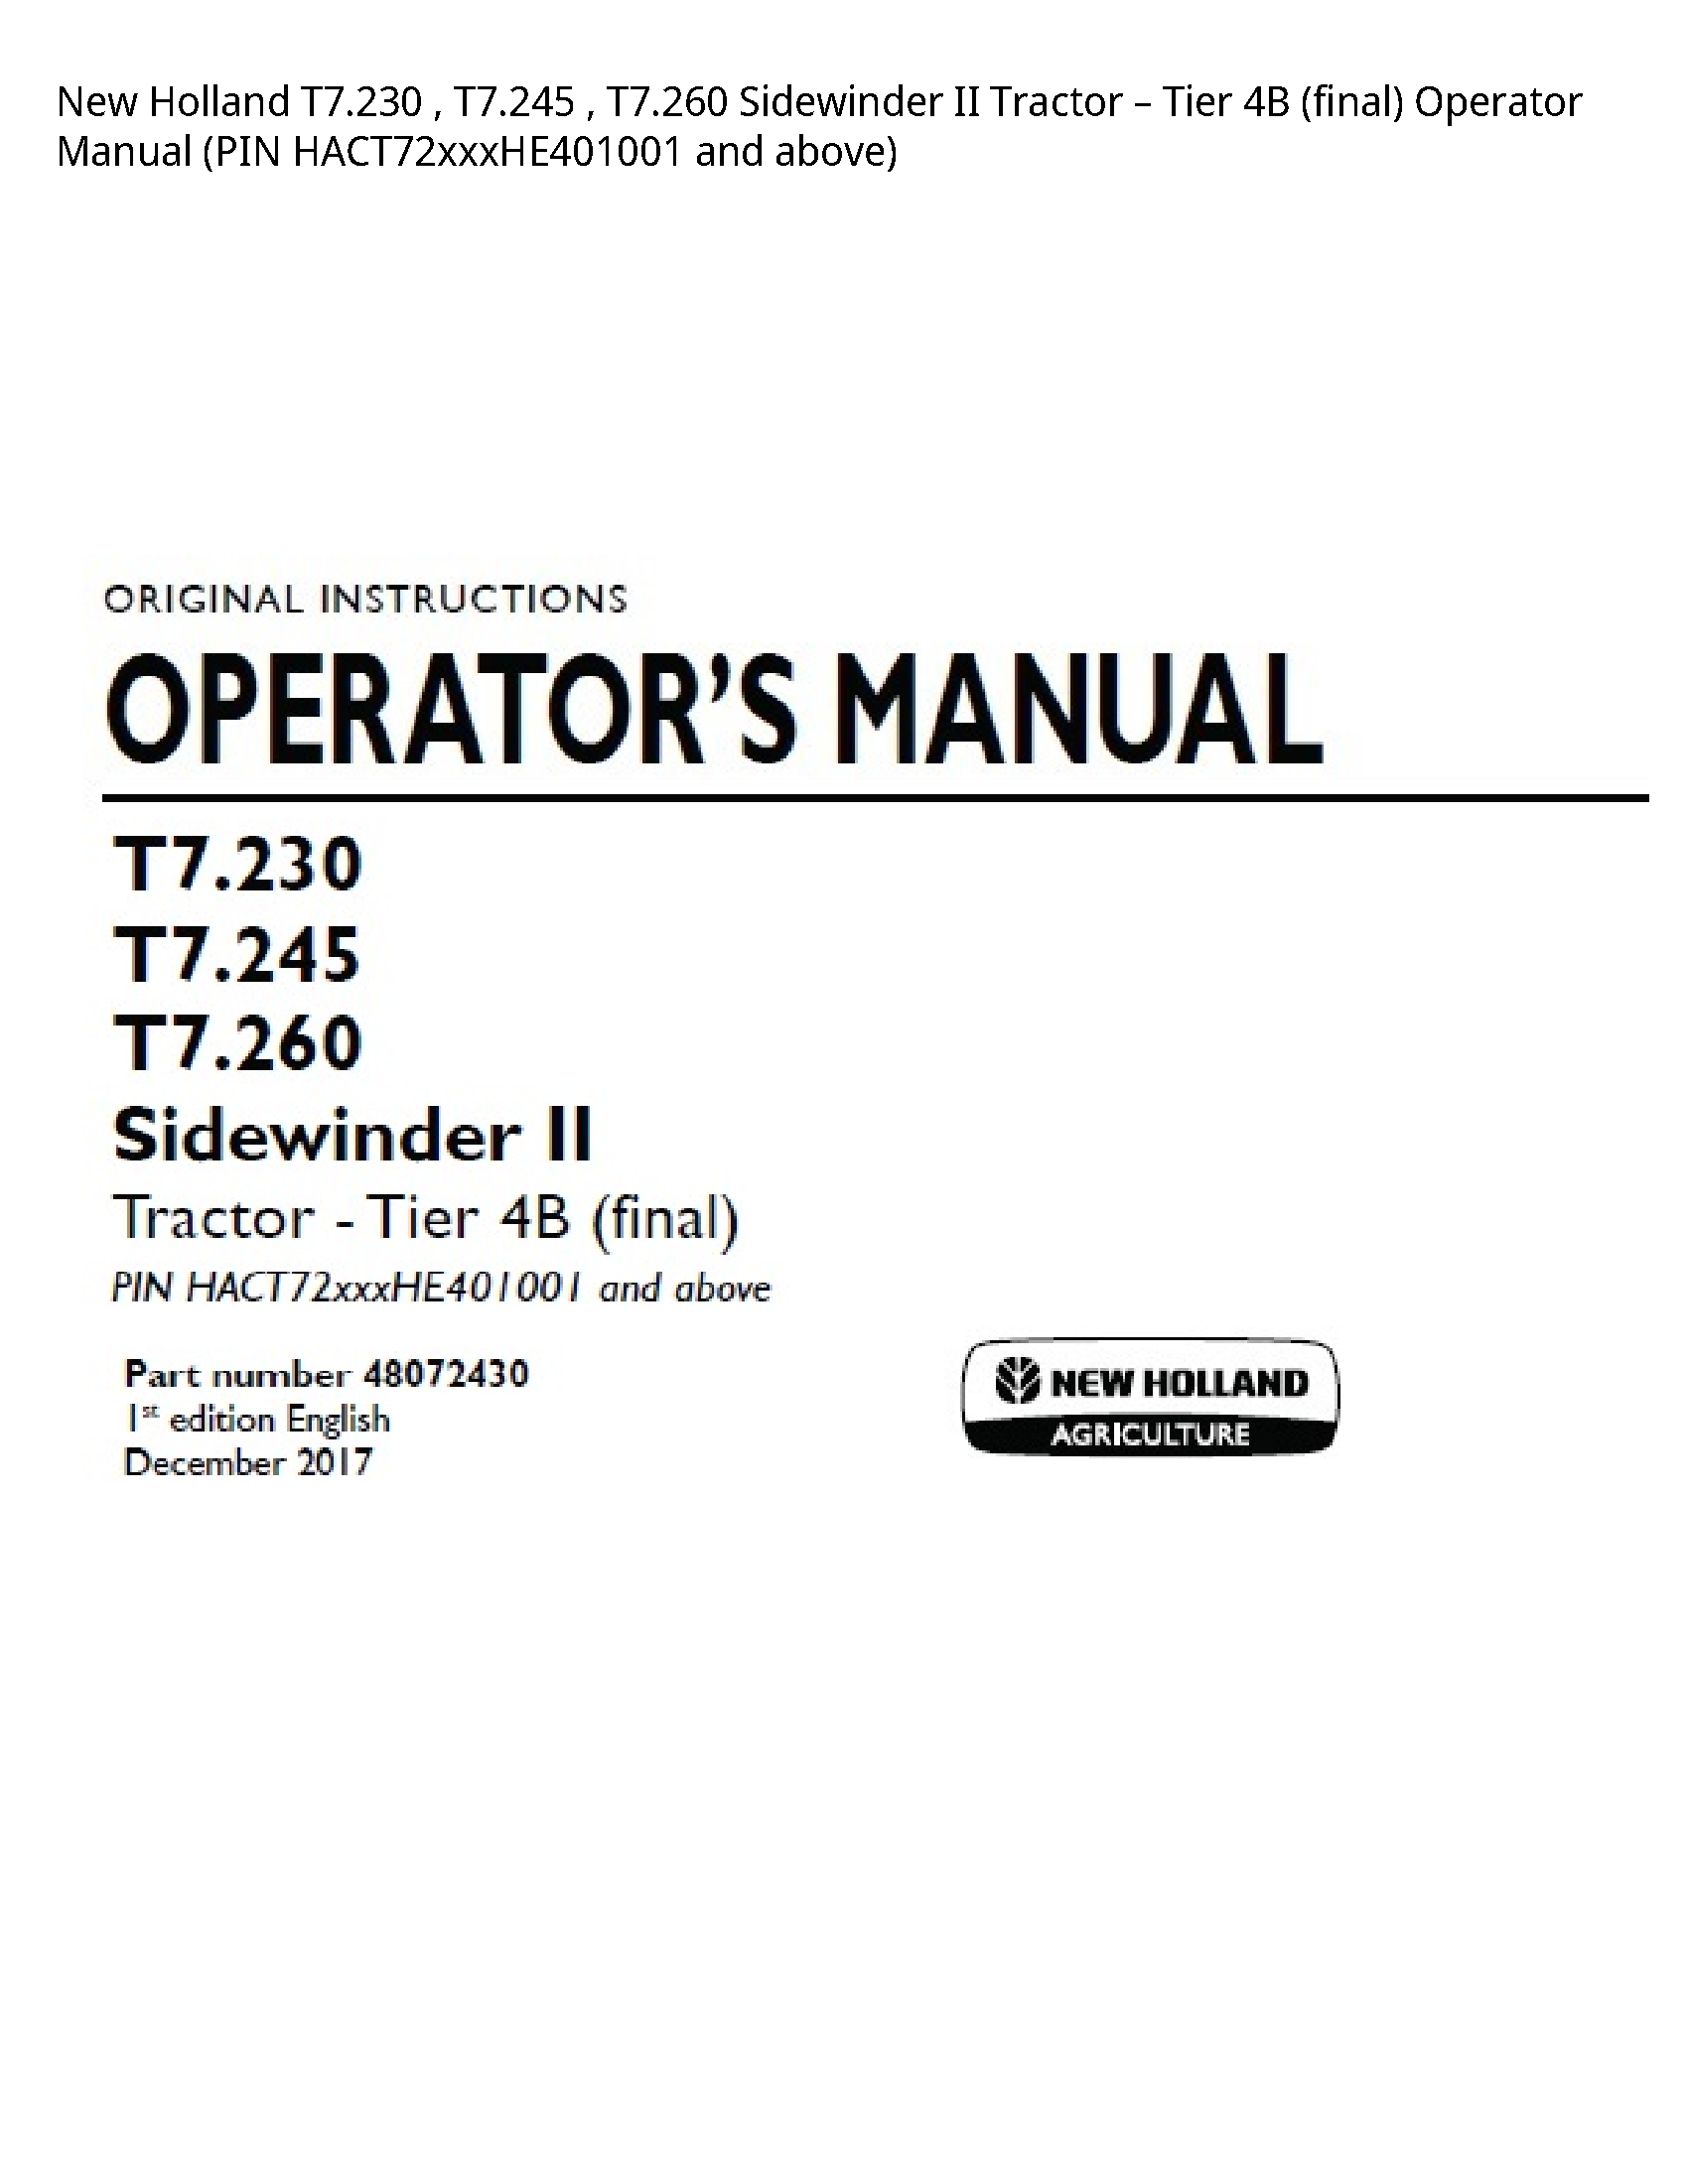 New Holland T7.230 Sidewinder II Tractor Tier (final) Operator manual